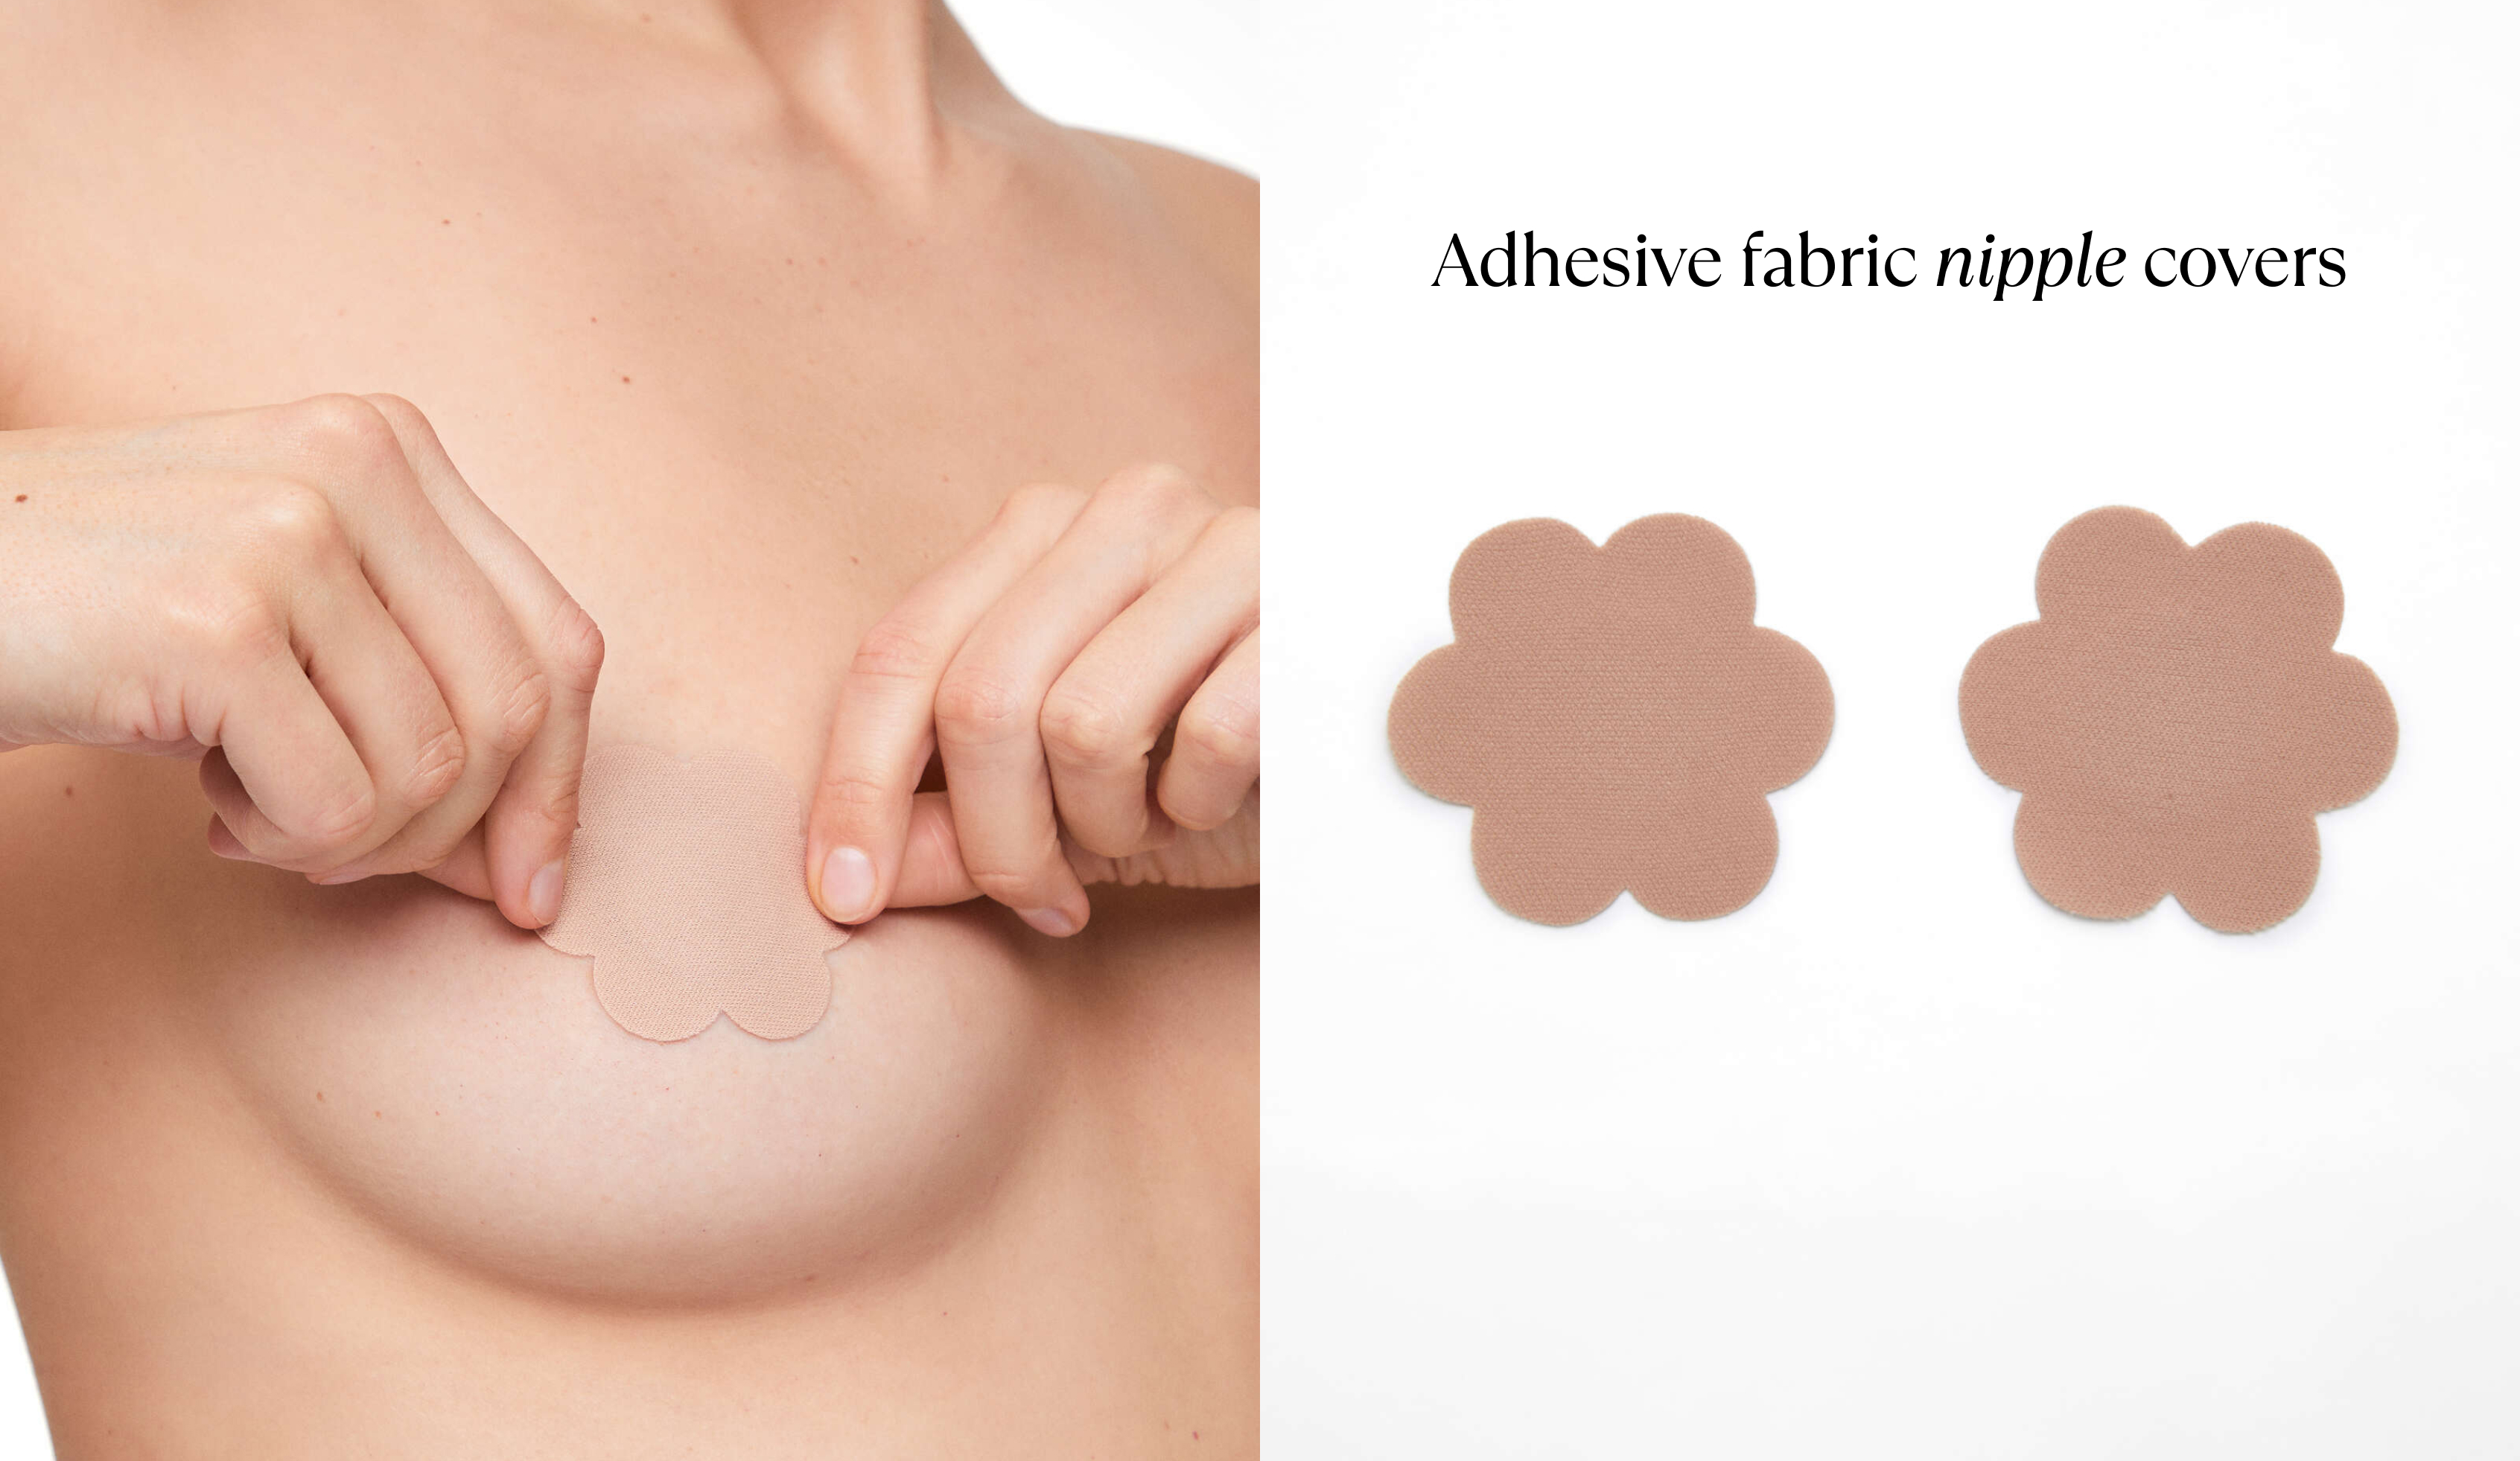 Adhesive fabric nipple covers